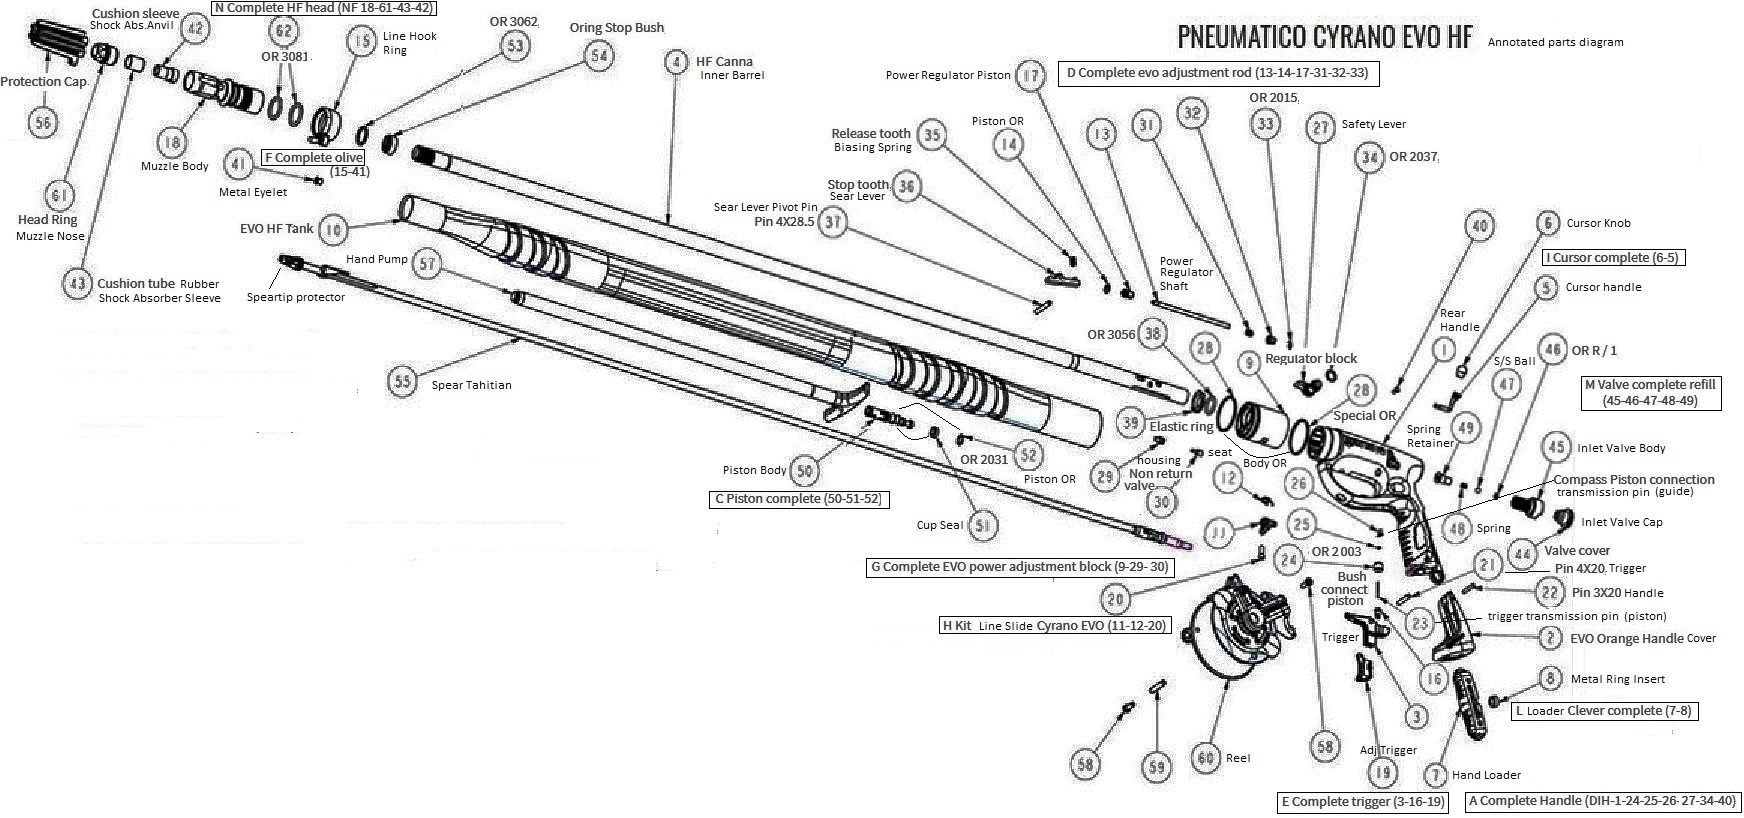 Cyrano Evo parts diagram annotated.jpg